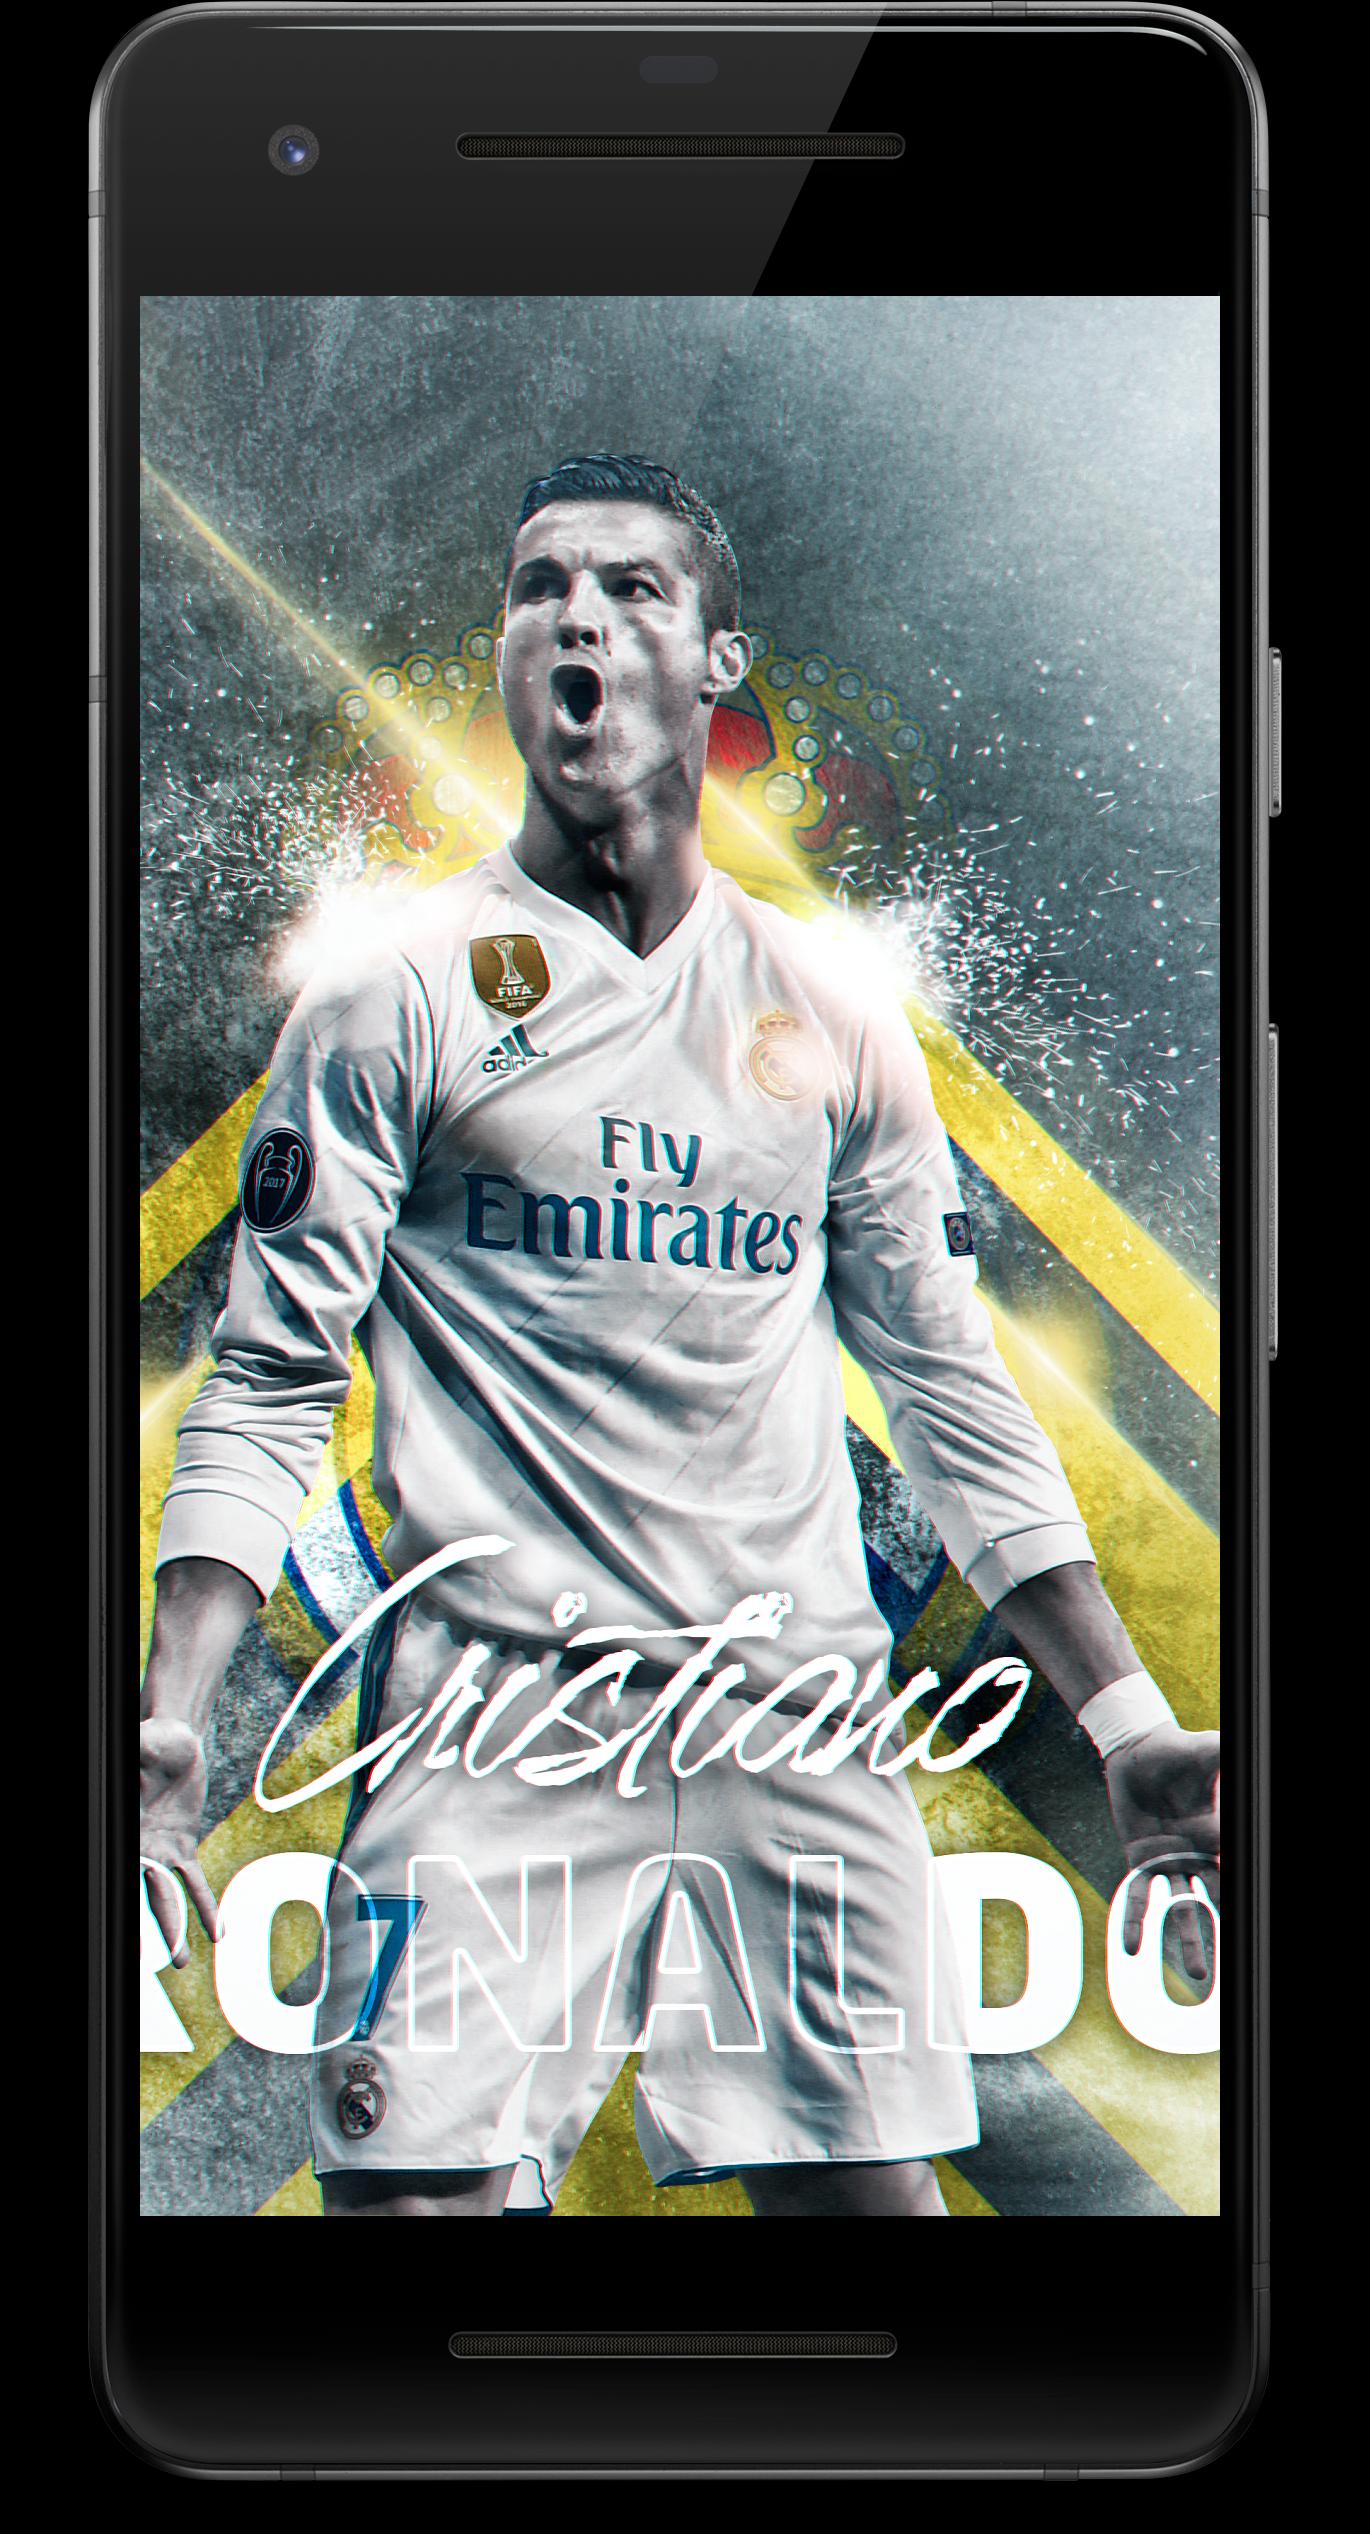 Cristiano Ronaldo Wallpaper For Android Apk